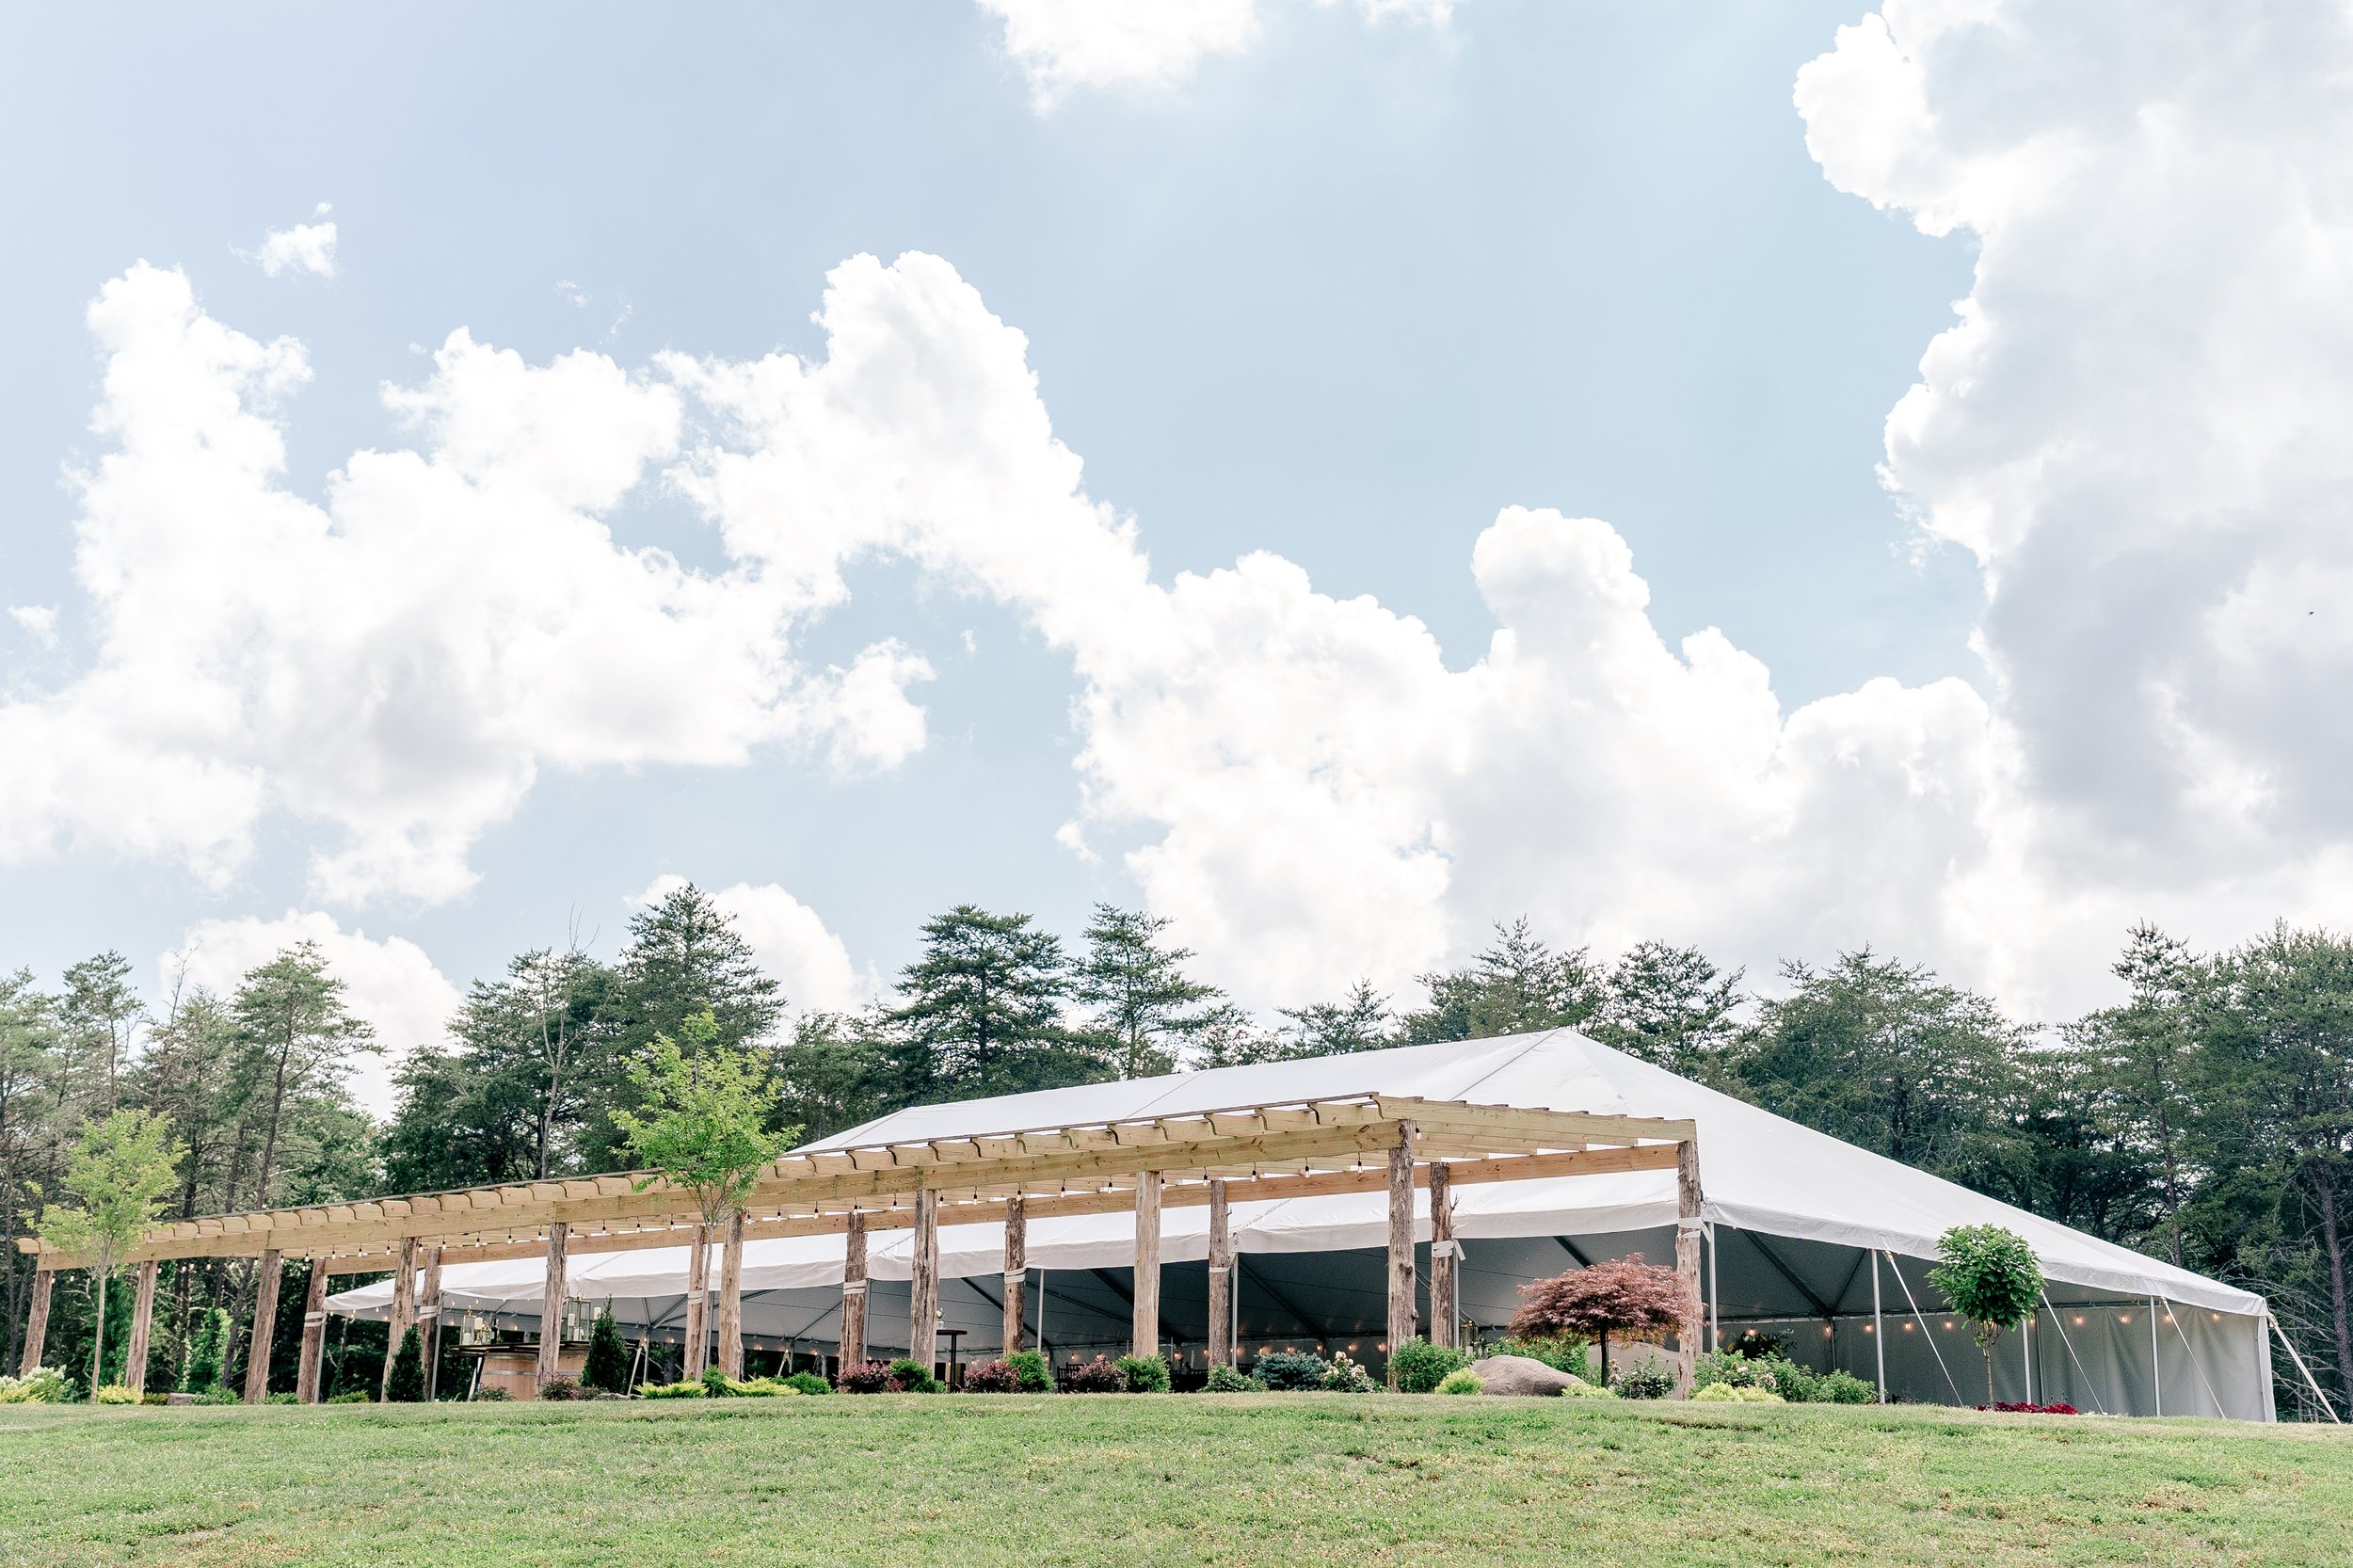 New wedding venue in Prince William County Virginia - The Pavilion at Sunshine Ridge Winery Farm